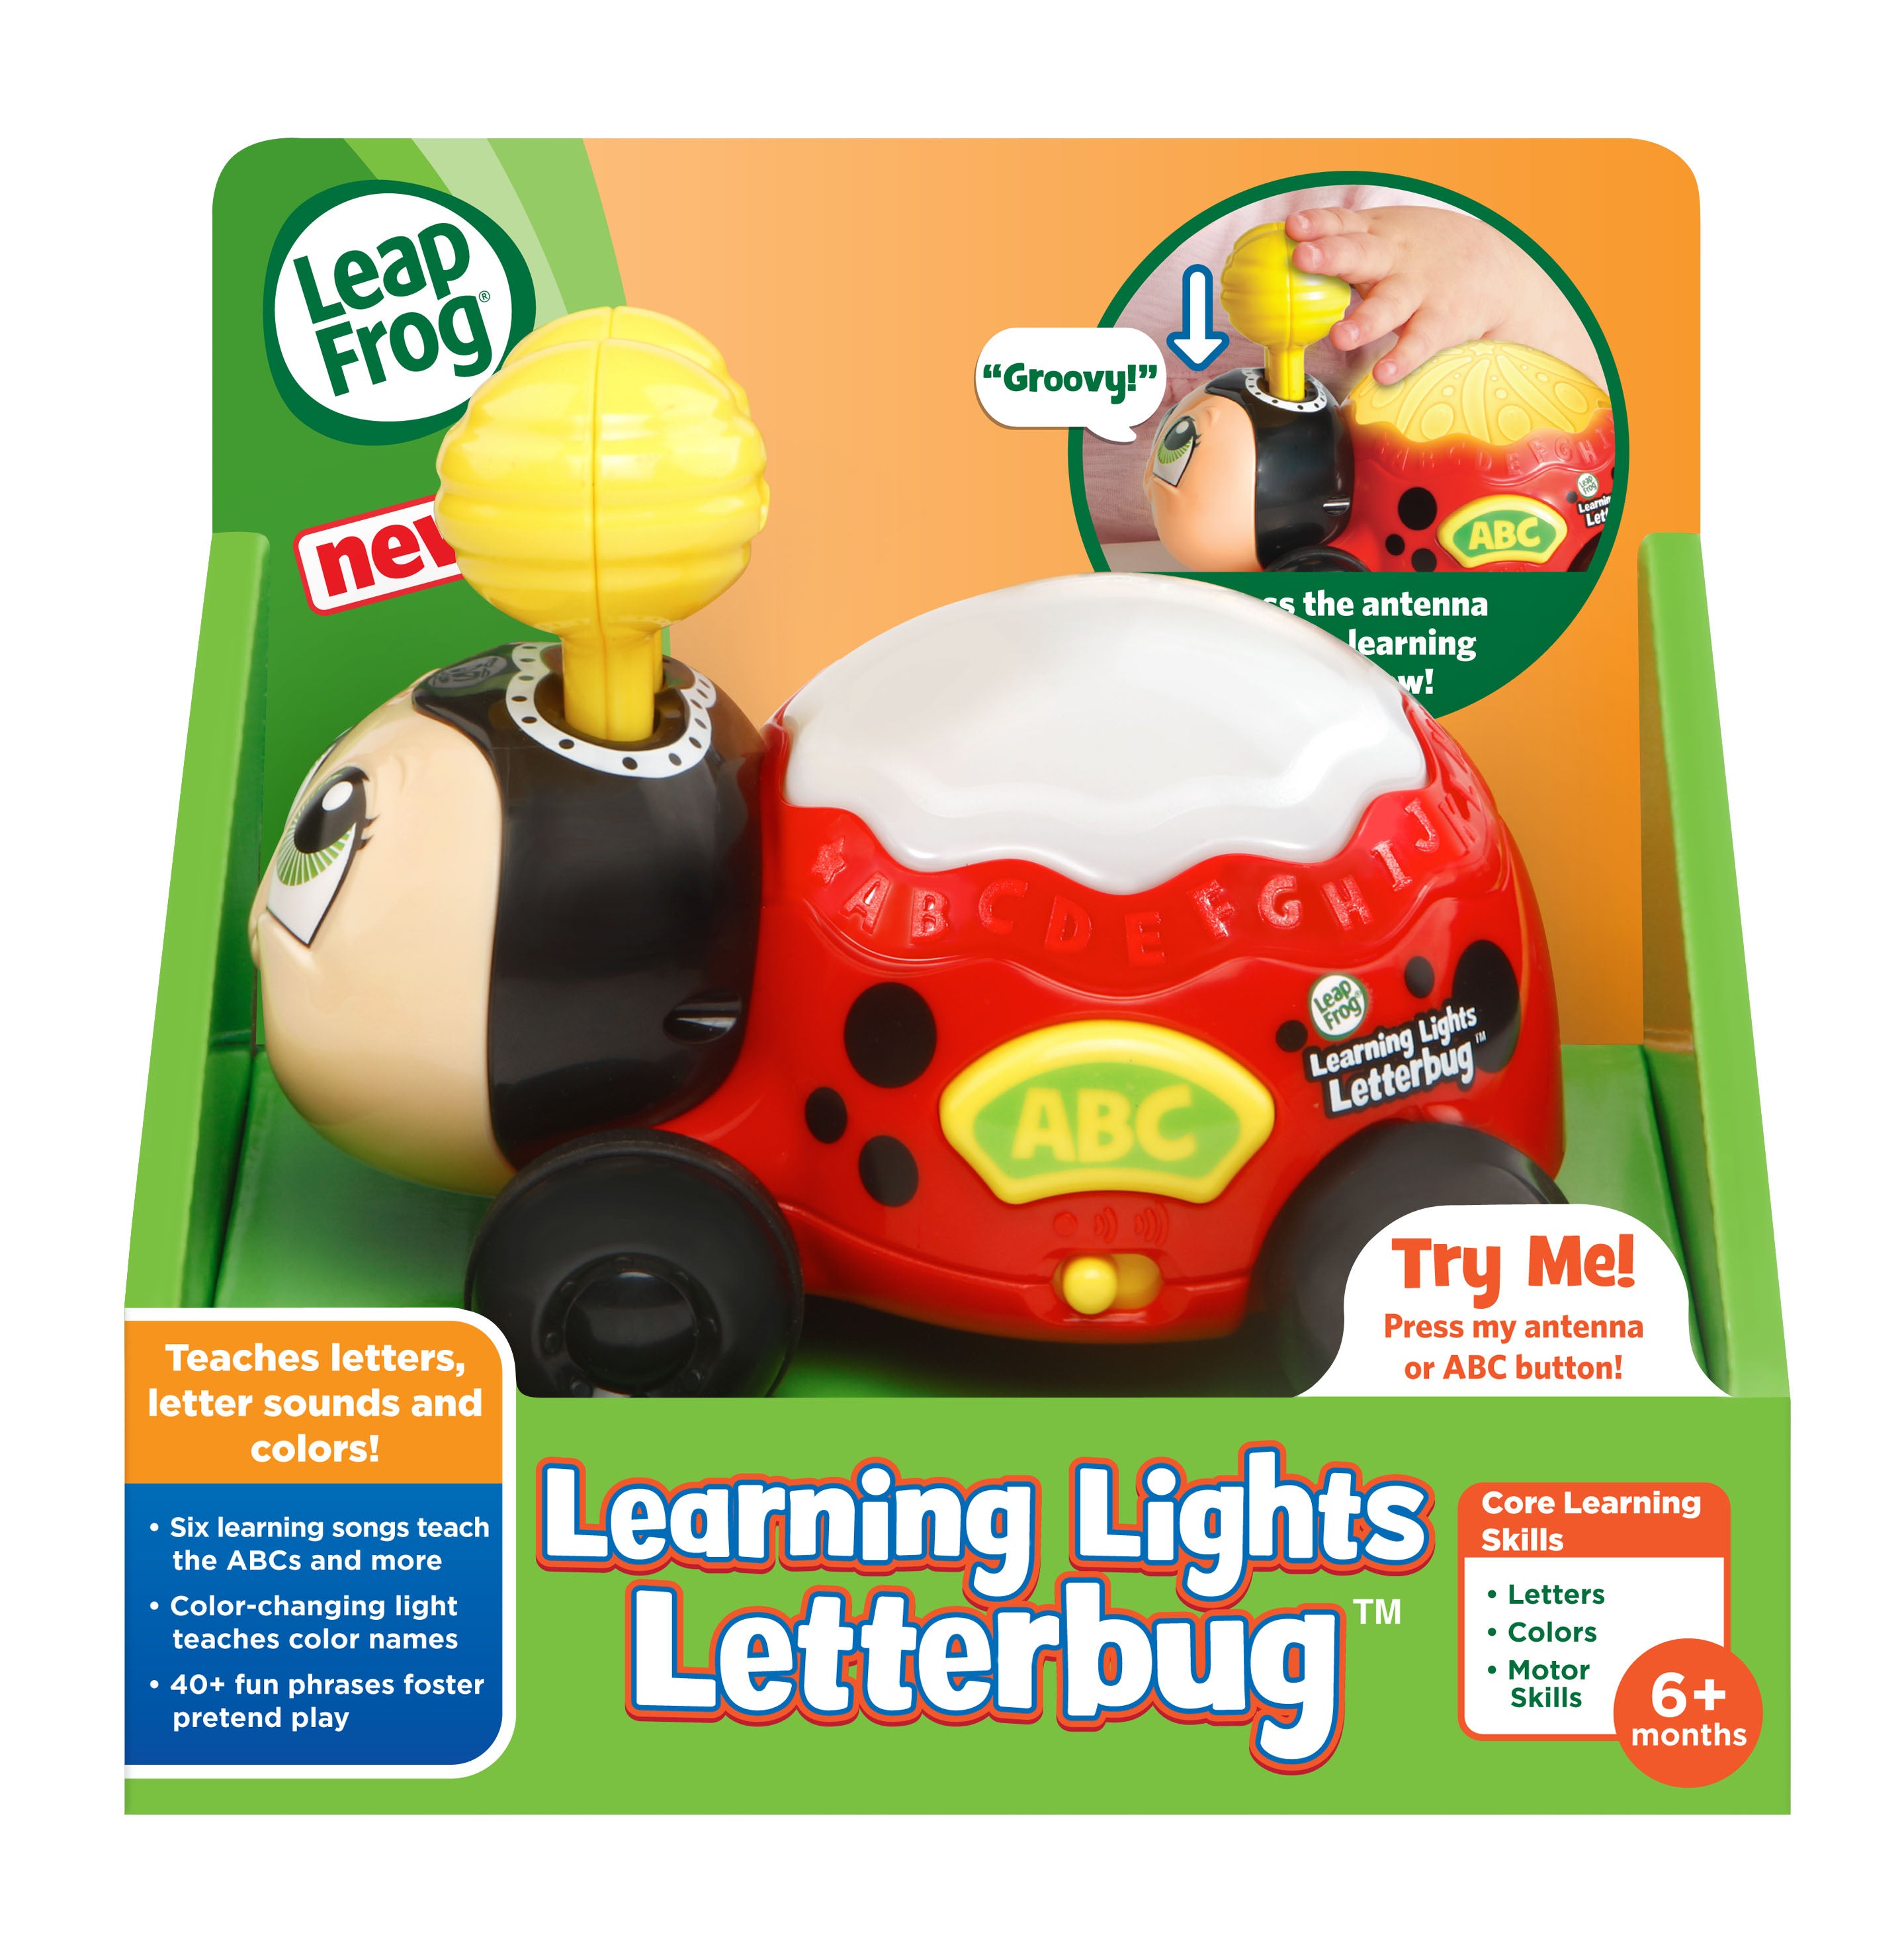 Leapfrog Learning Lights Letter Bug